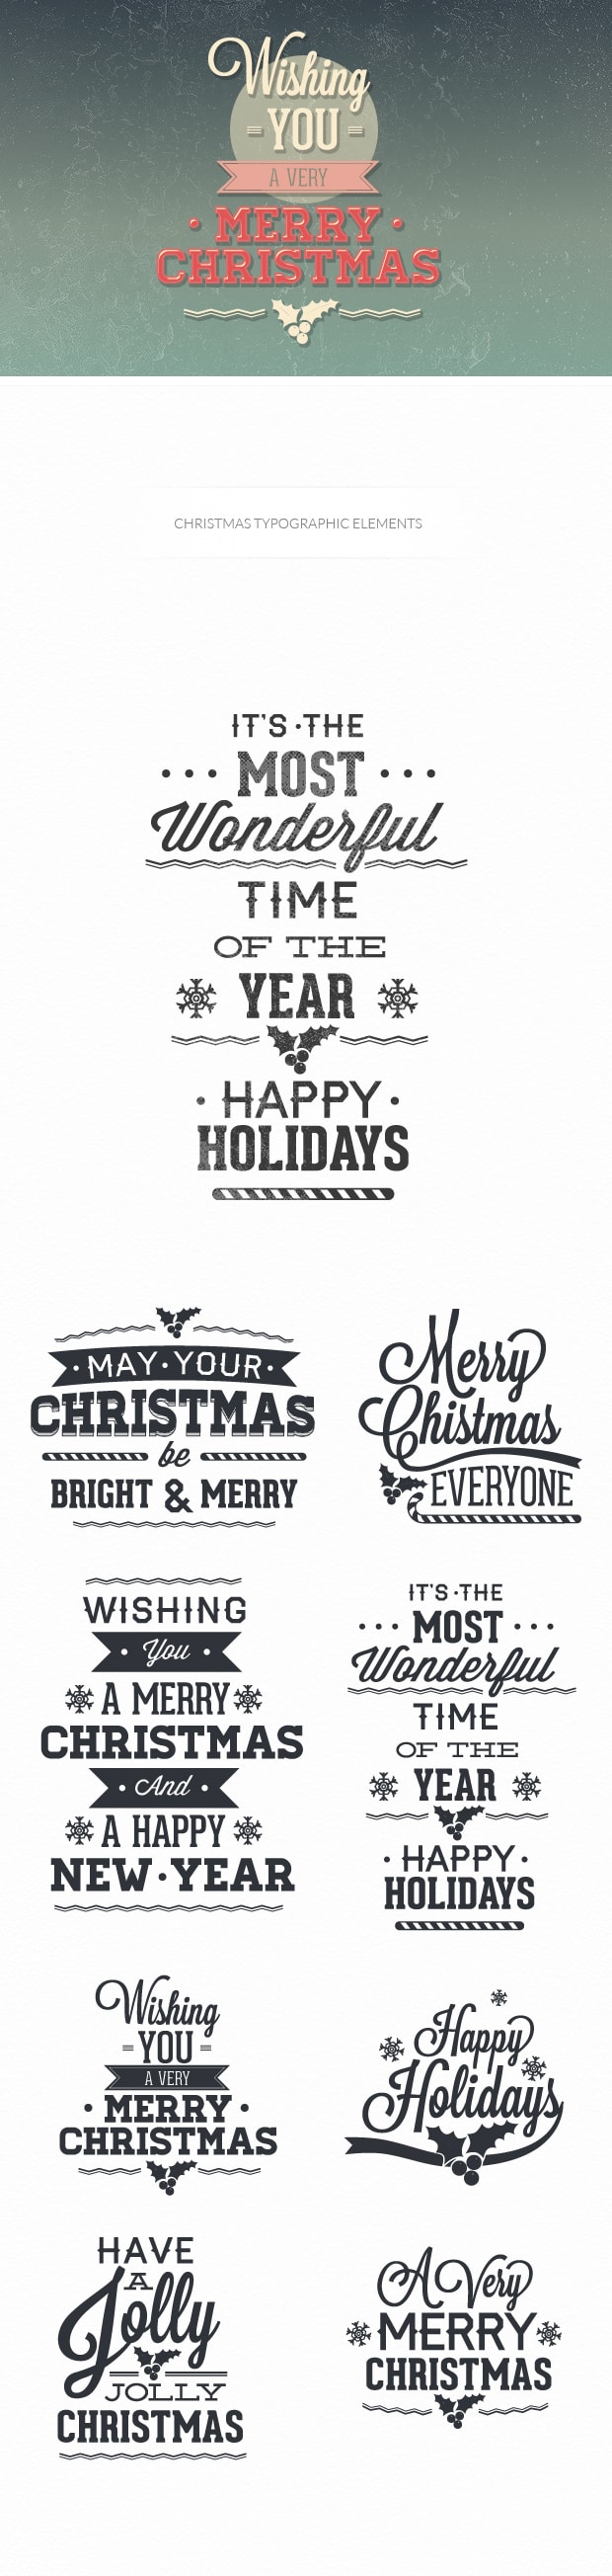 Christmas day typographic elements 6